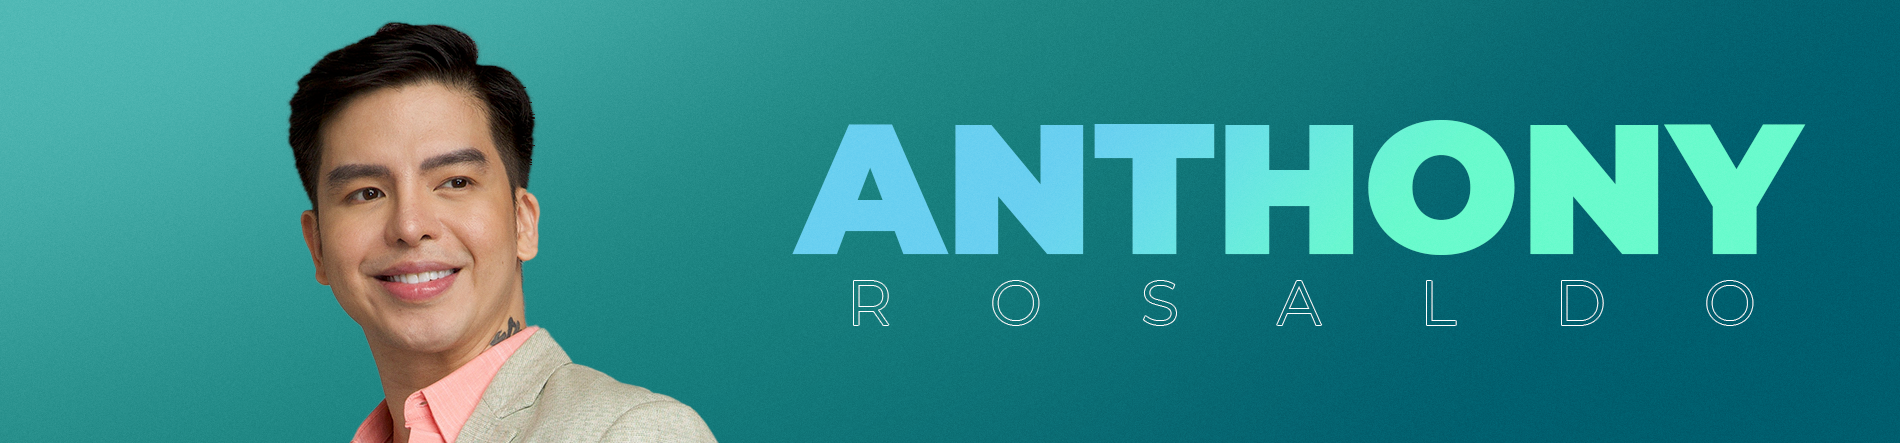 Anthony Rosaldo Desktop Banner